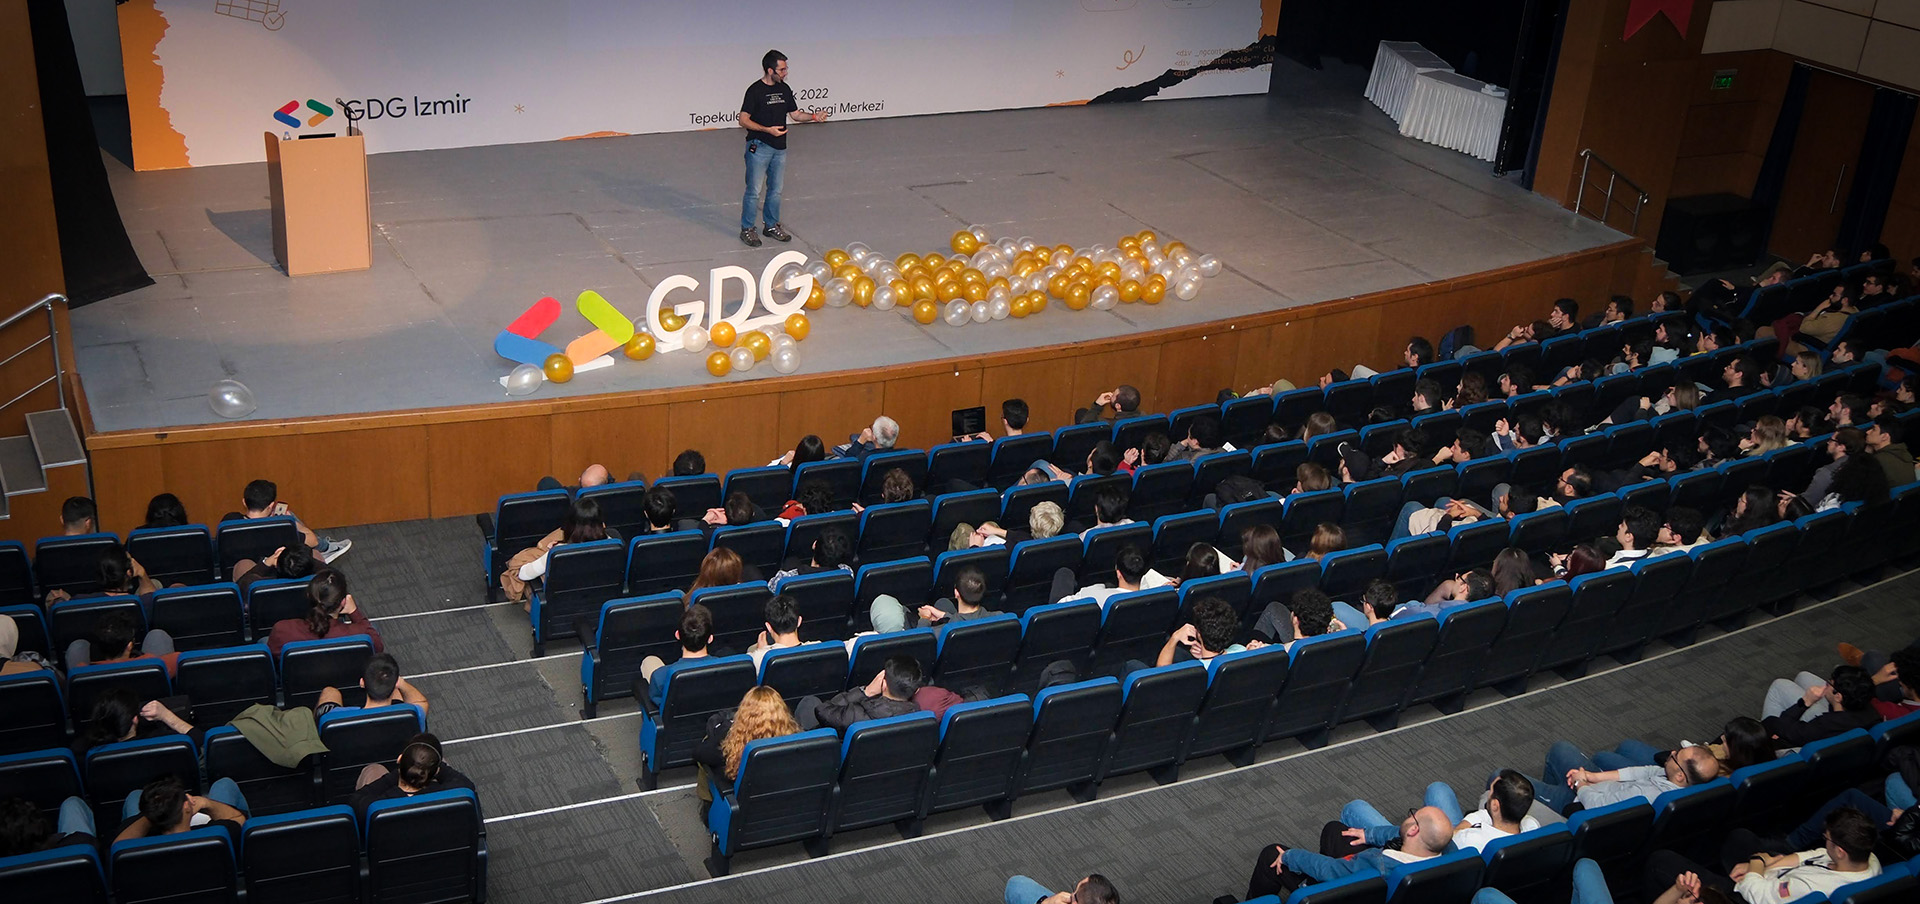 GDG Izmir 2022 Event Photo